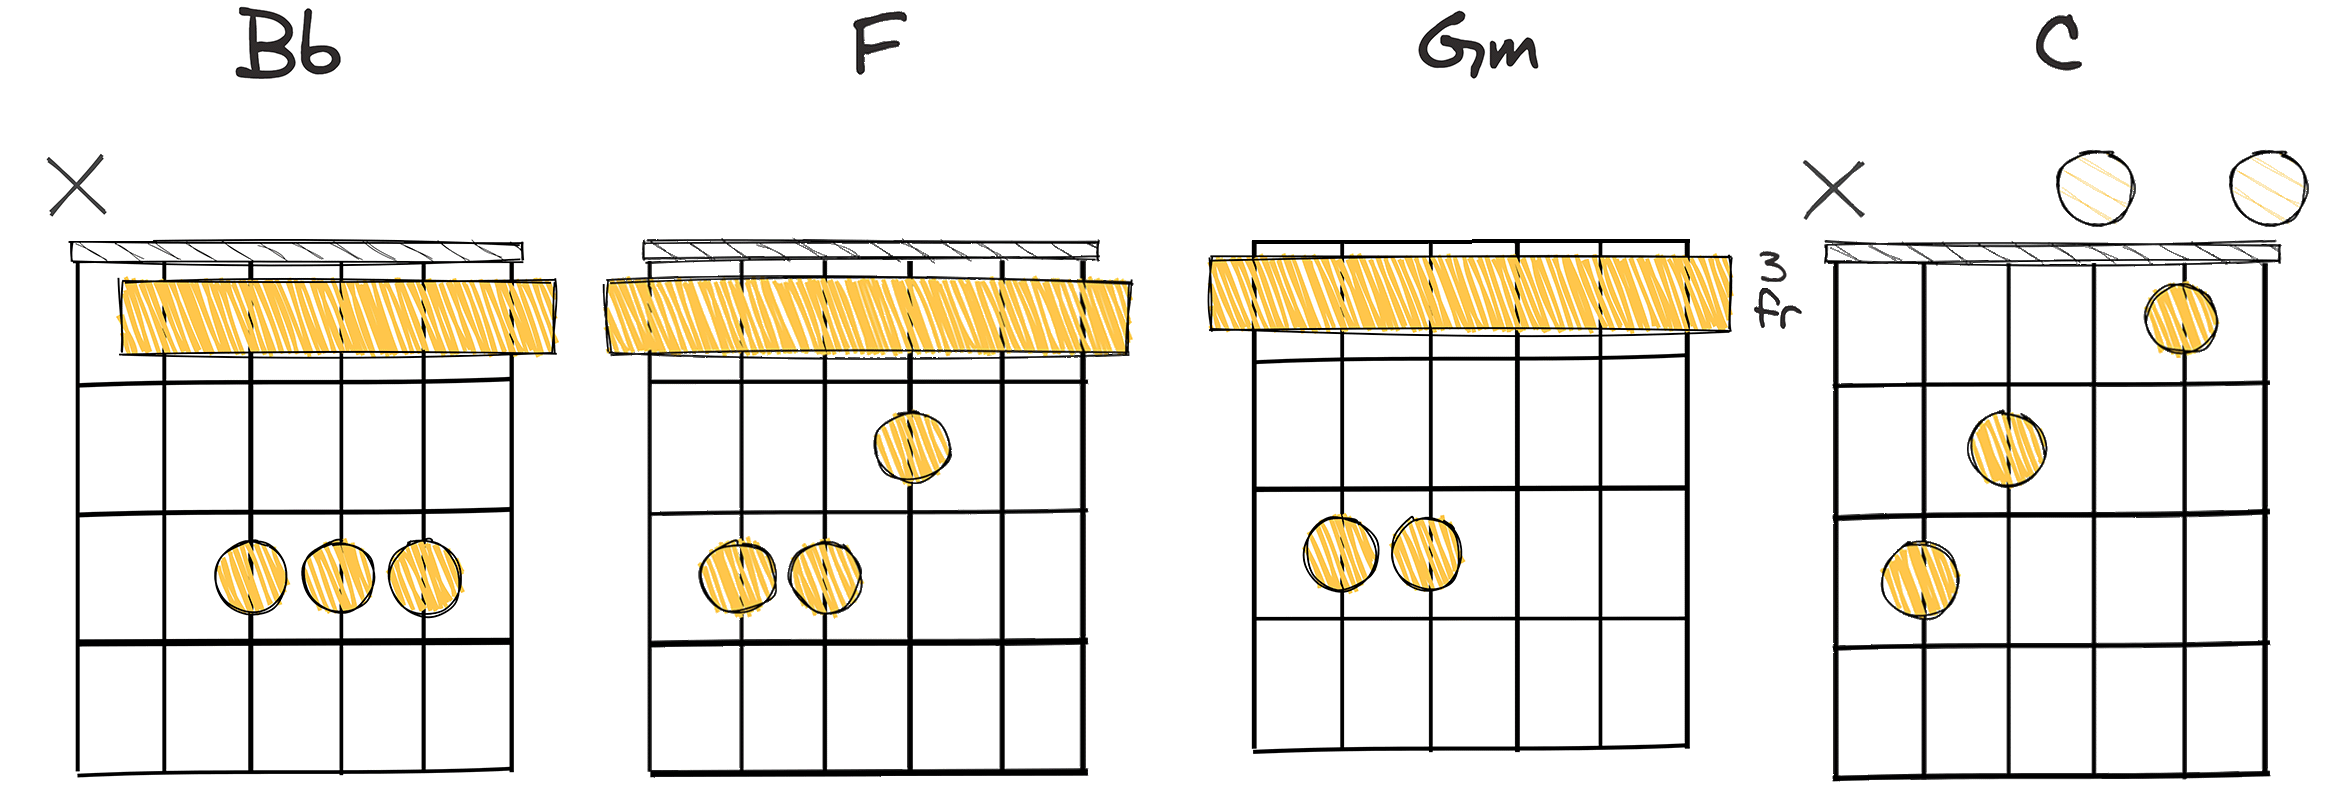 IV-I-ii-V (4-1-2-5) chords diagram